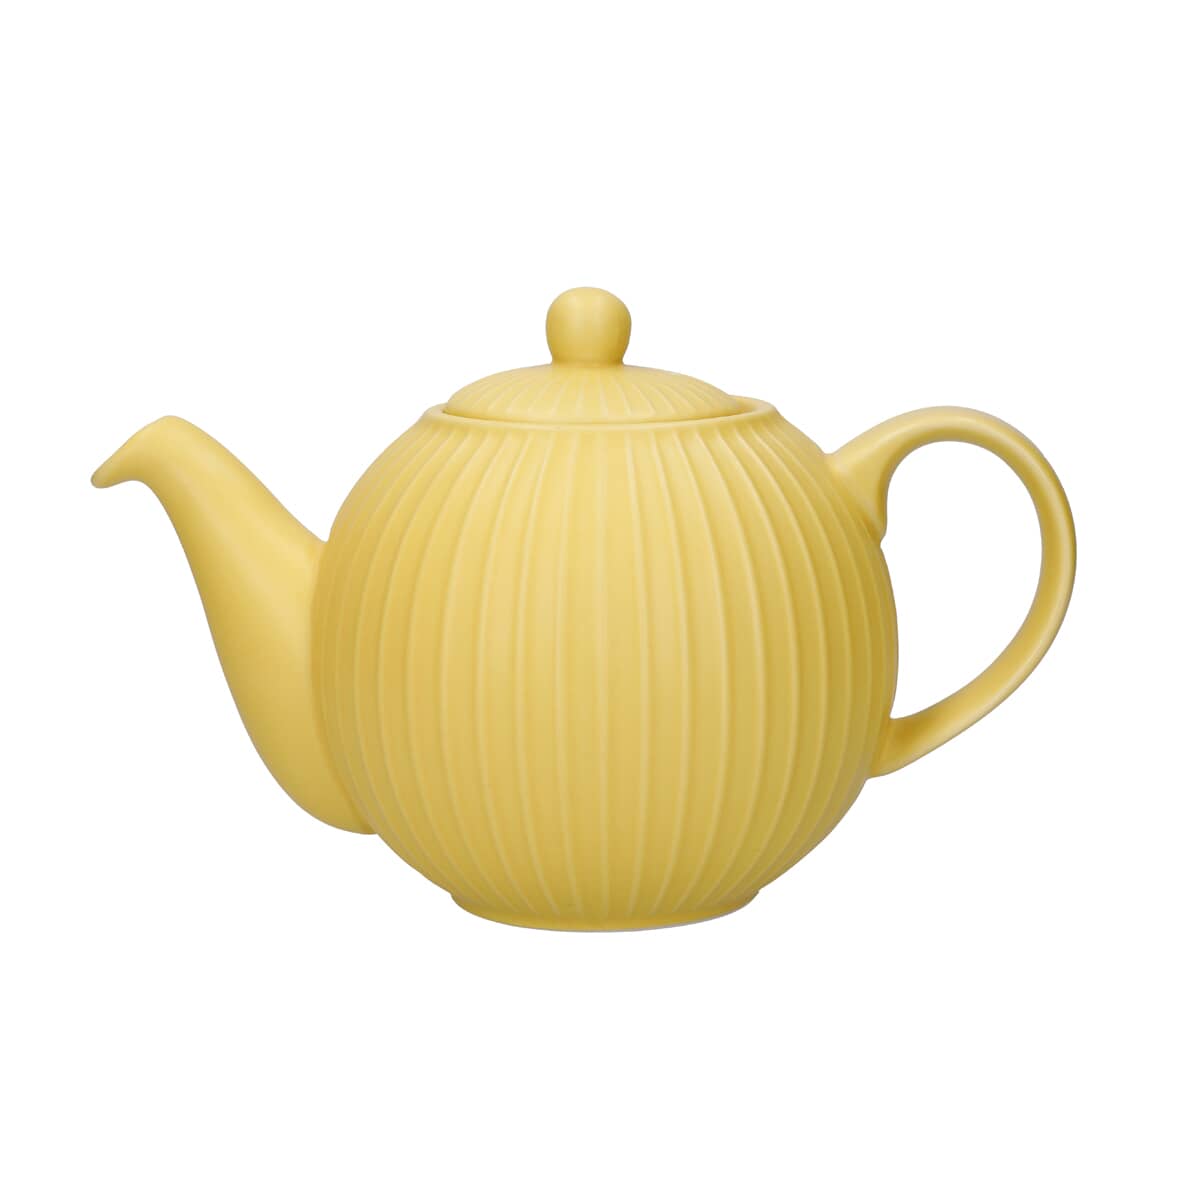 London Pottery Farmhouse 4 Cup Teapot Multi Spot